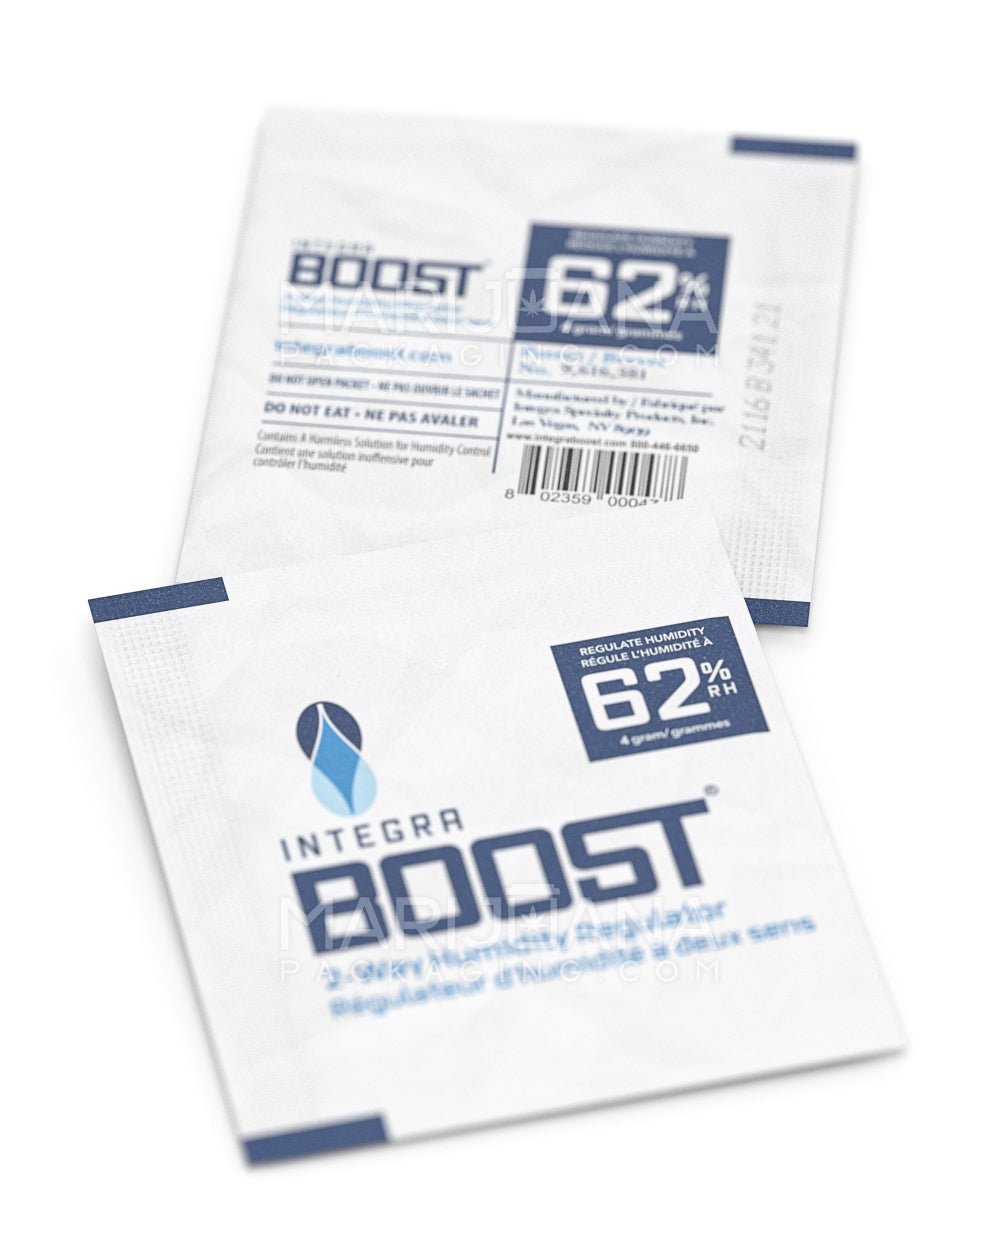 INTEGRA | Boost Control Packs | 4 Grams - 62% - 1000 Count Humidity Packs - 5